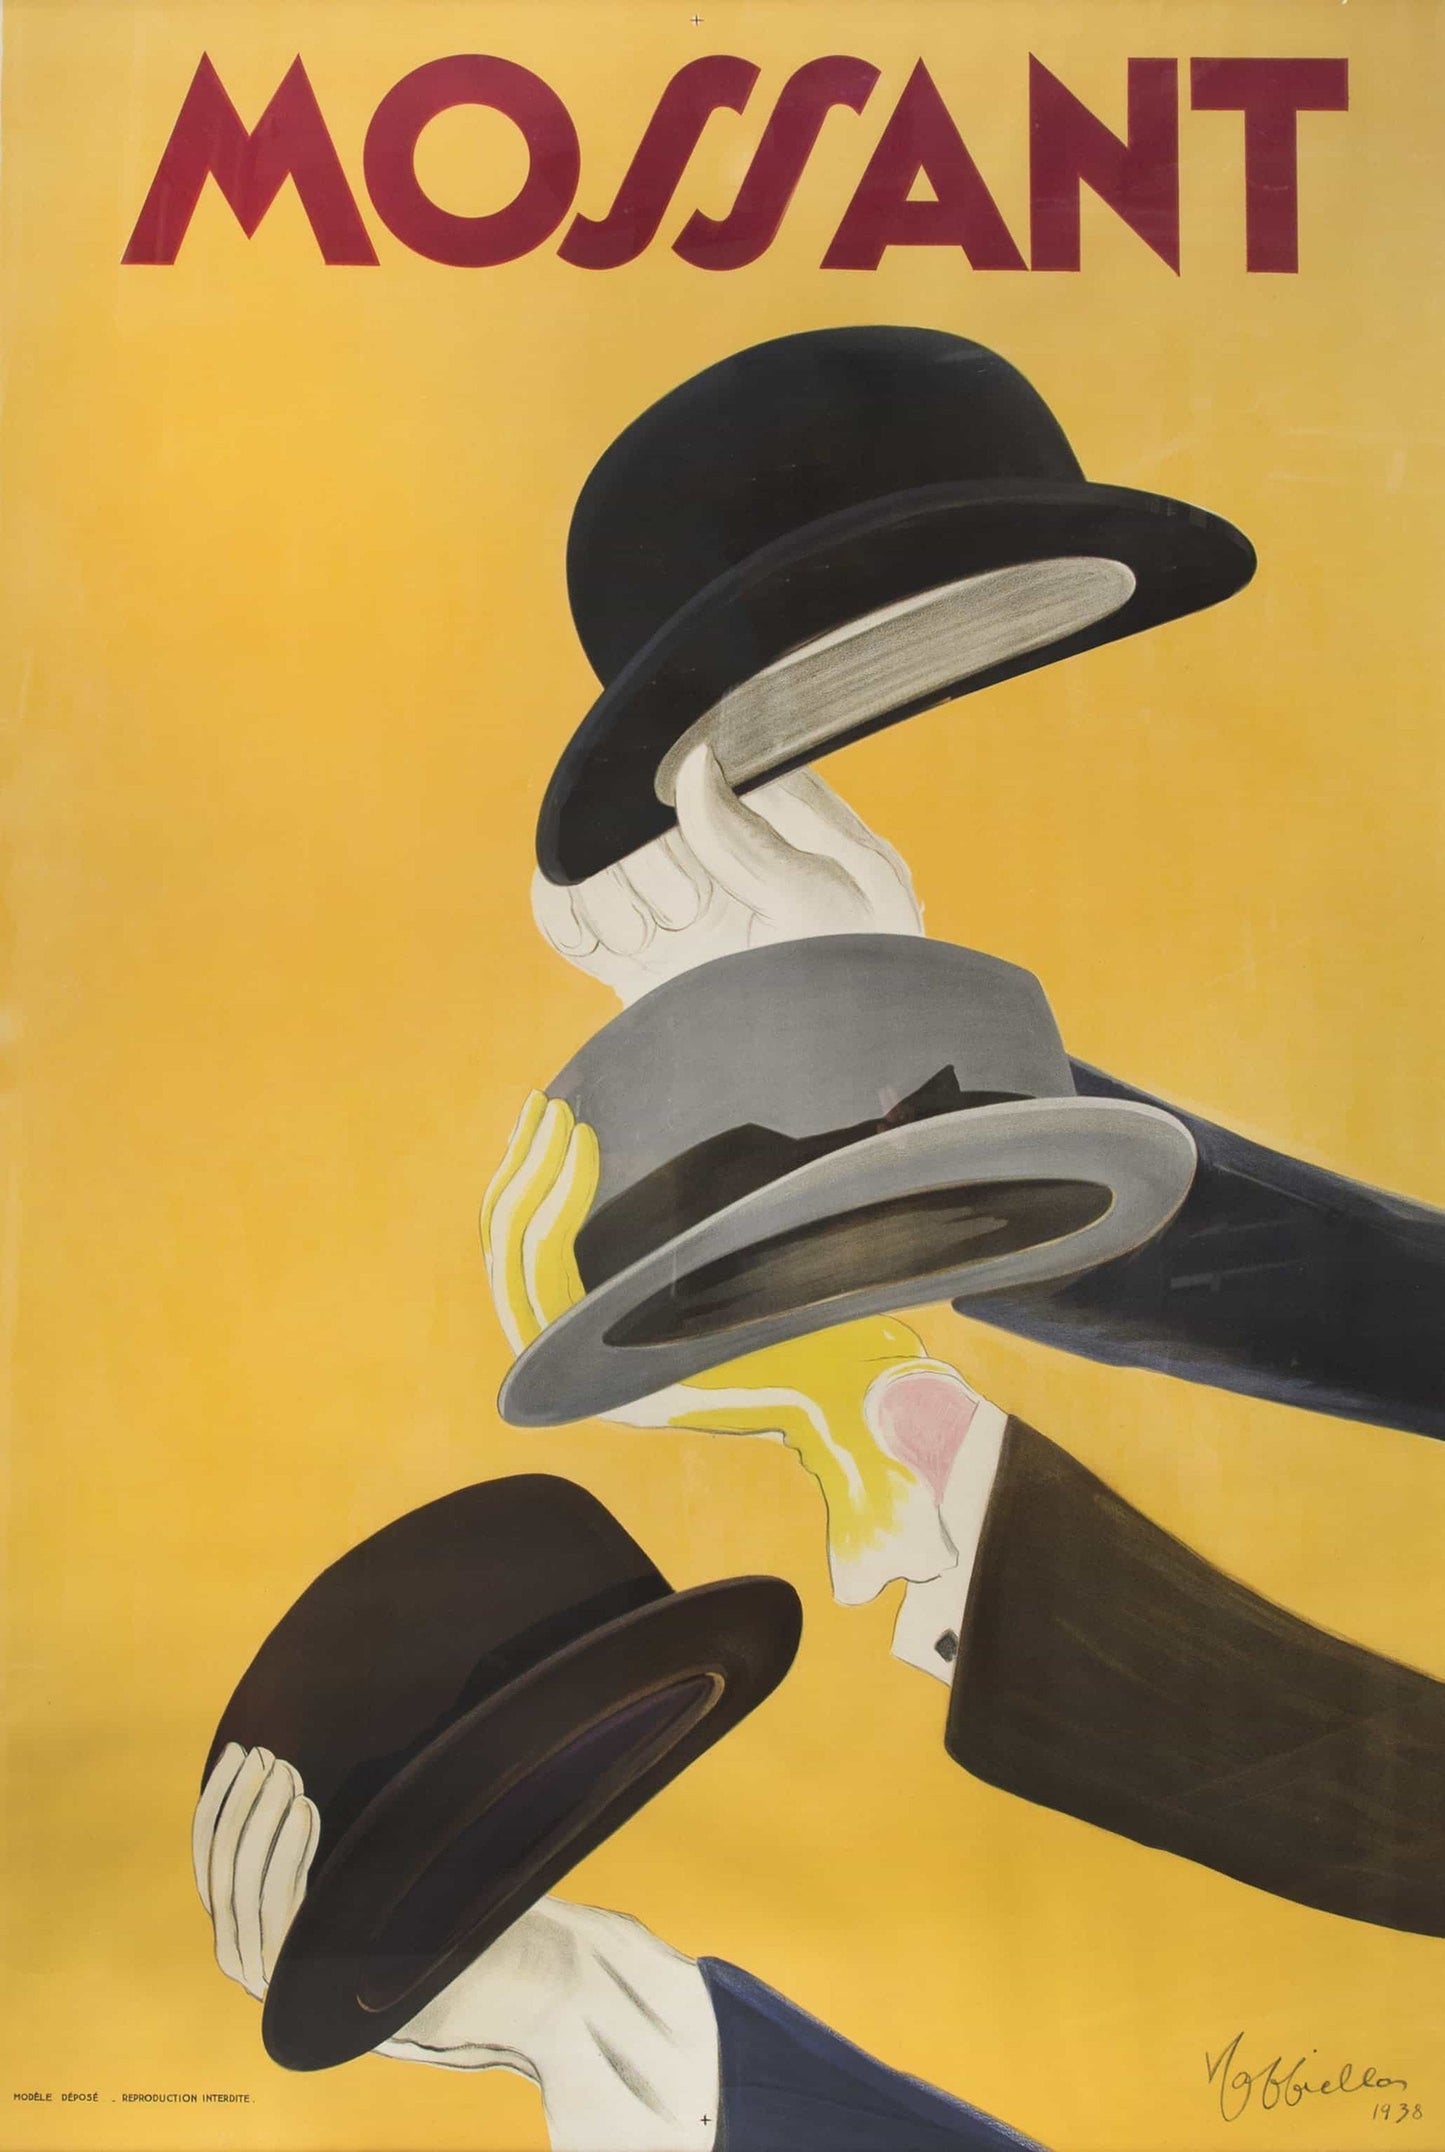 Mossant Poster (1930s) | Vintage poster prints | Leonetto Cappiello Posters, Prints, & Visual Artwork The Trumpet Shop   